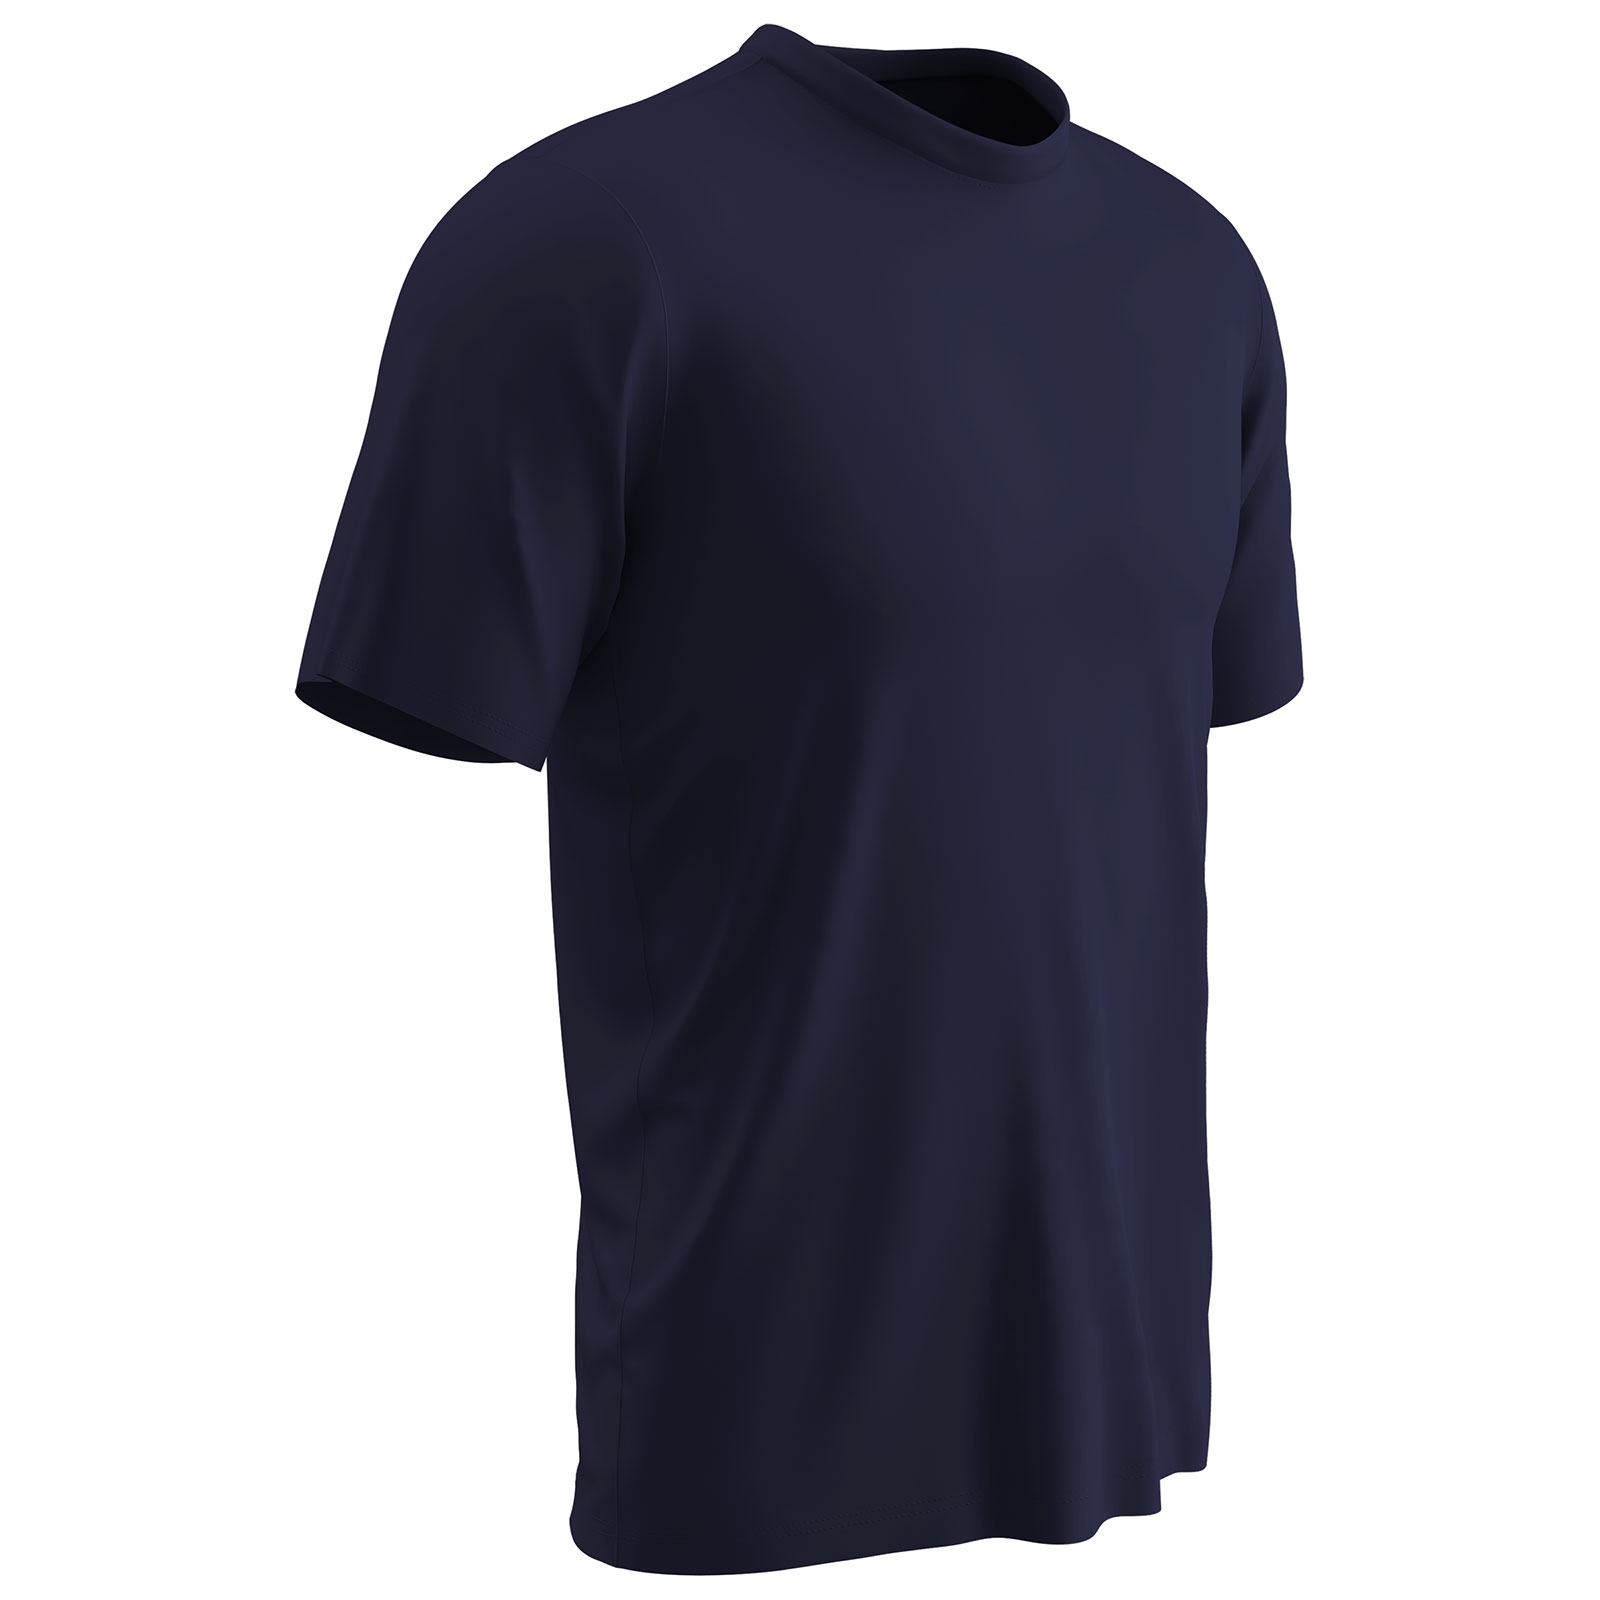 Champro Dri Gear T-Shirt Jersey